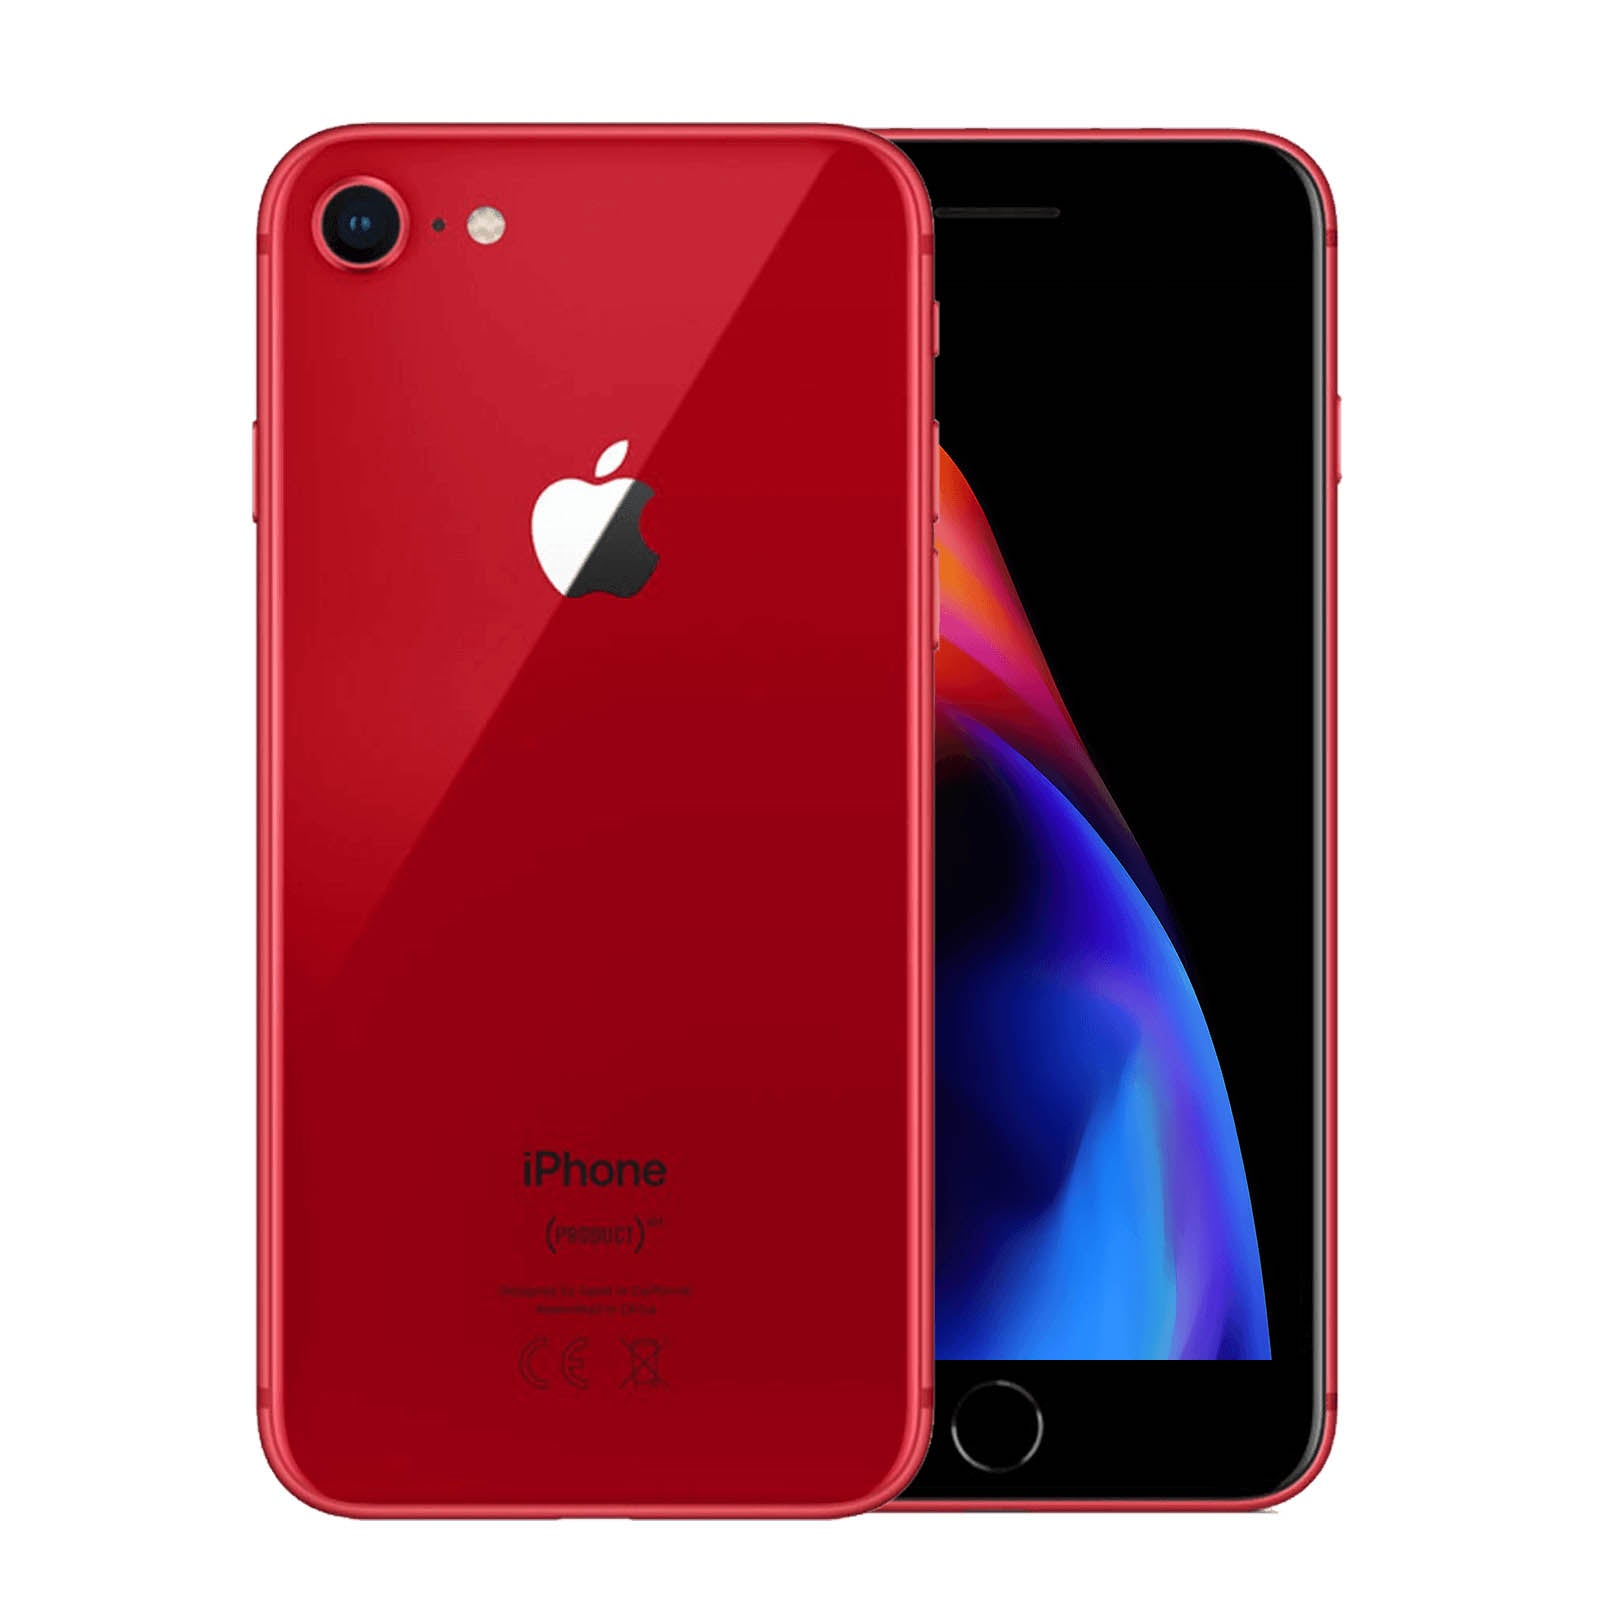 Apple iPhone 8 128GB Product Red Fair - Unlocked